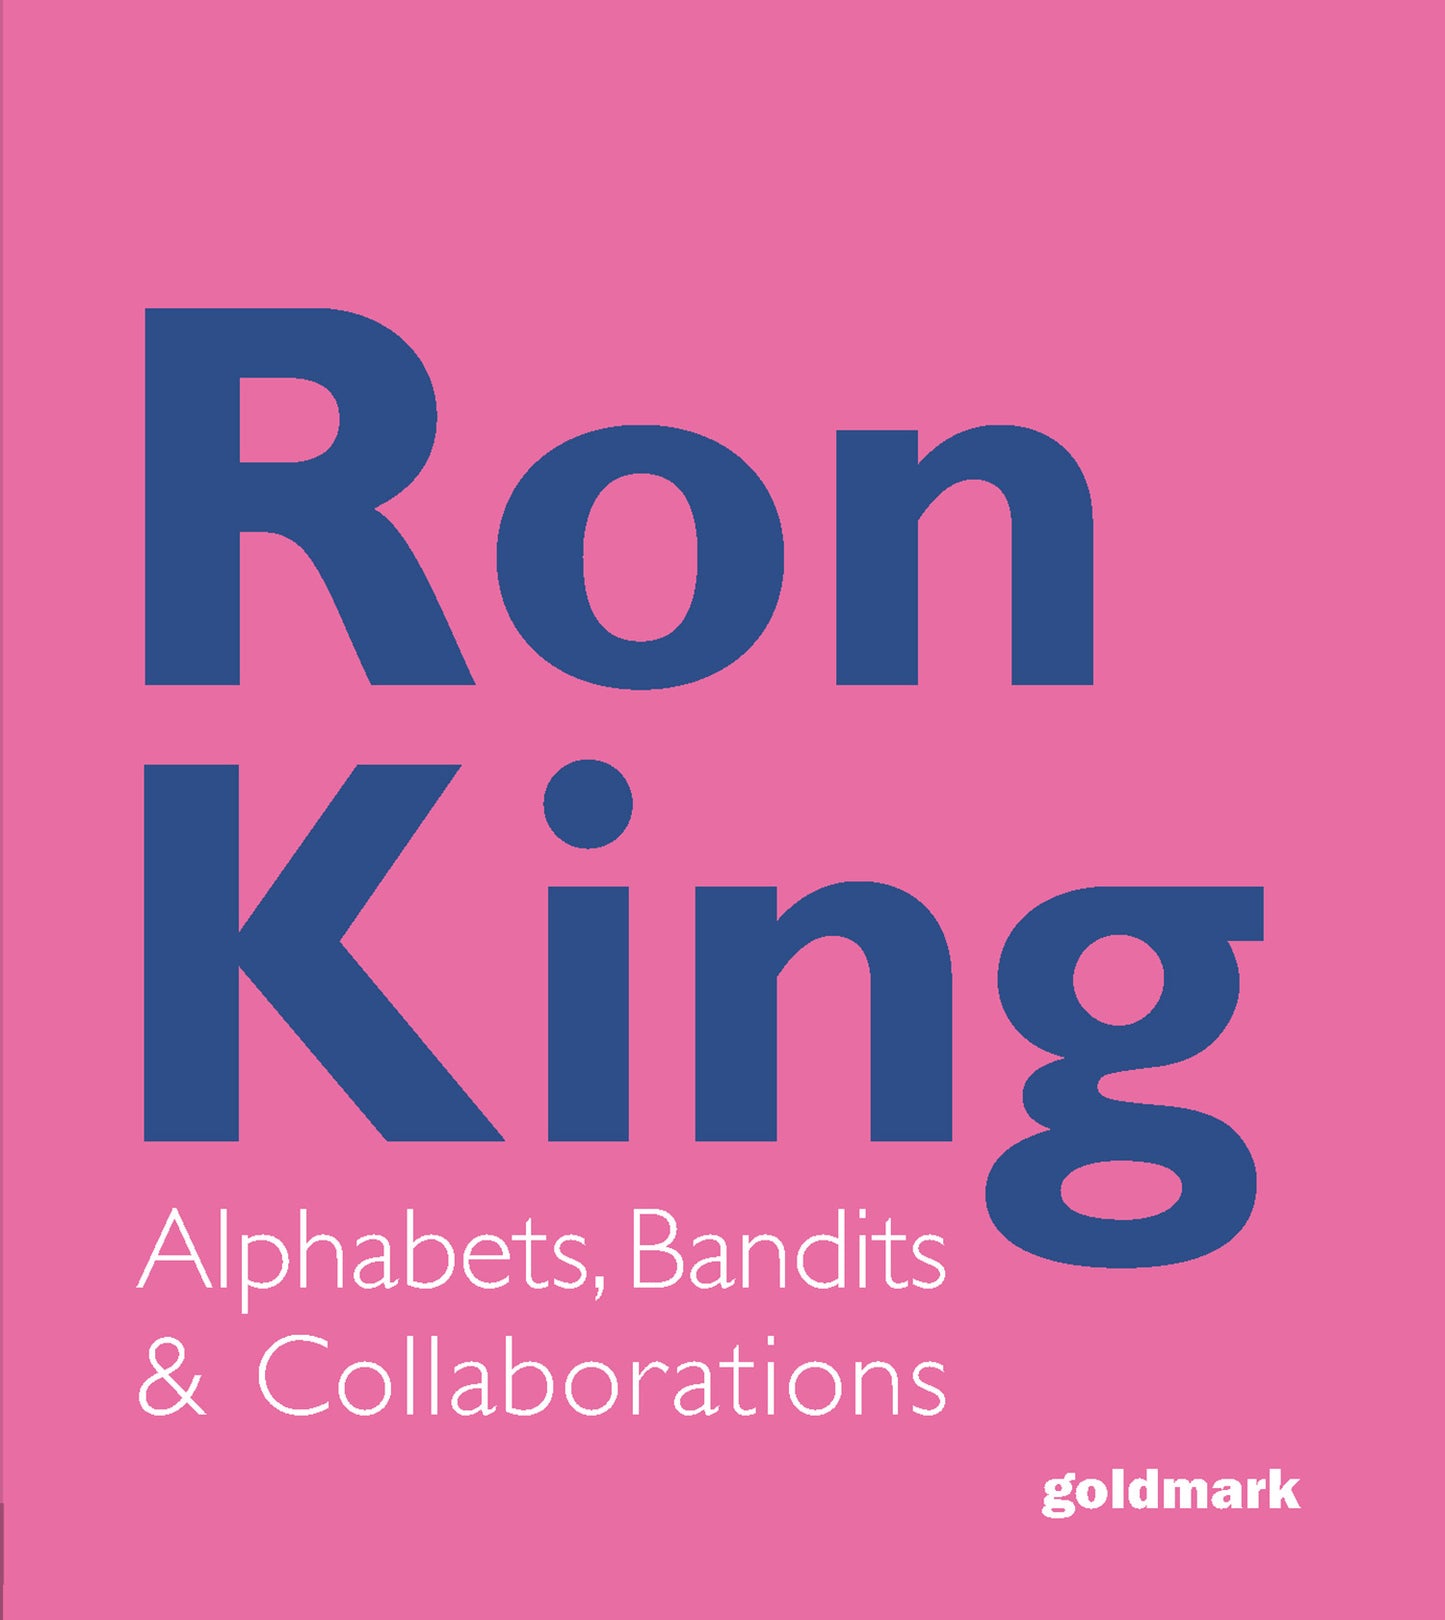 Ron King - Alphabets, Bandits & Collaborations